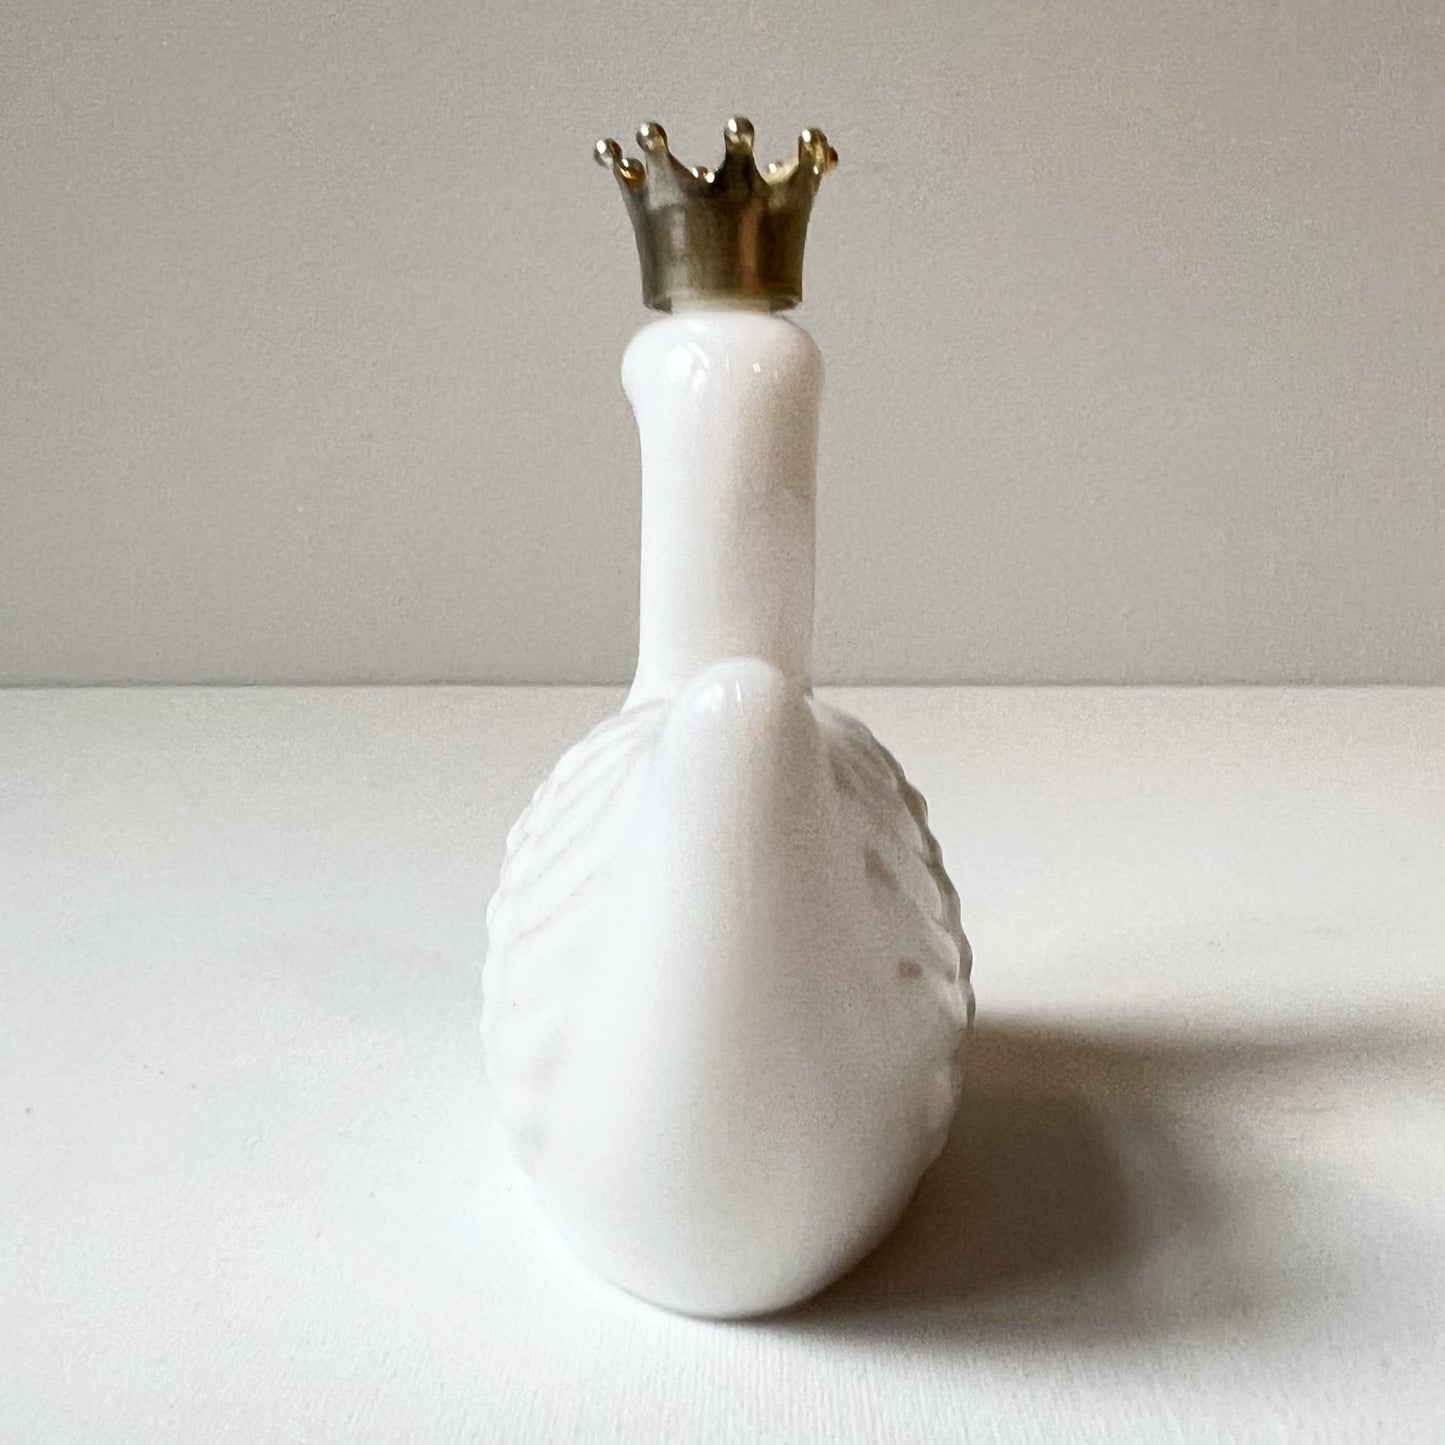 【Vintage】US - 1970s Avon Royal Swan White Milk Glass Perfume Bottle